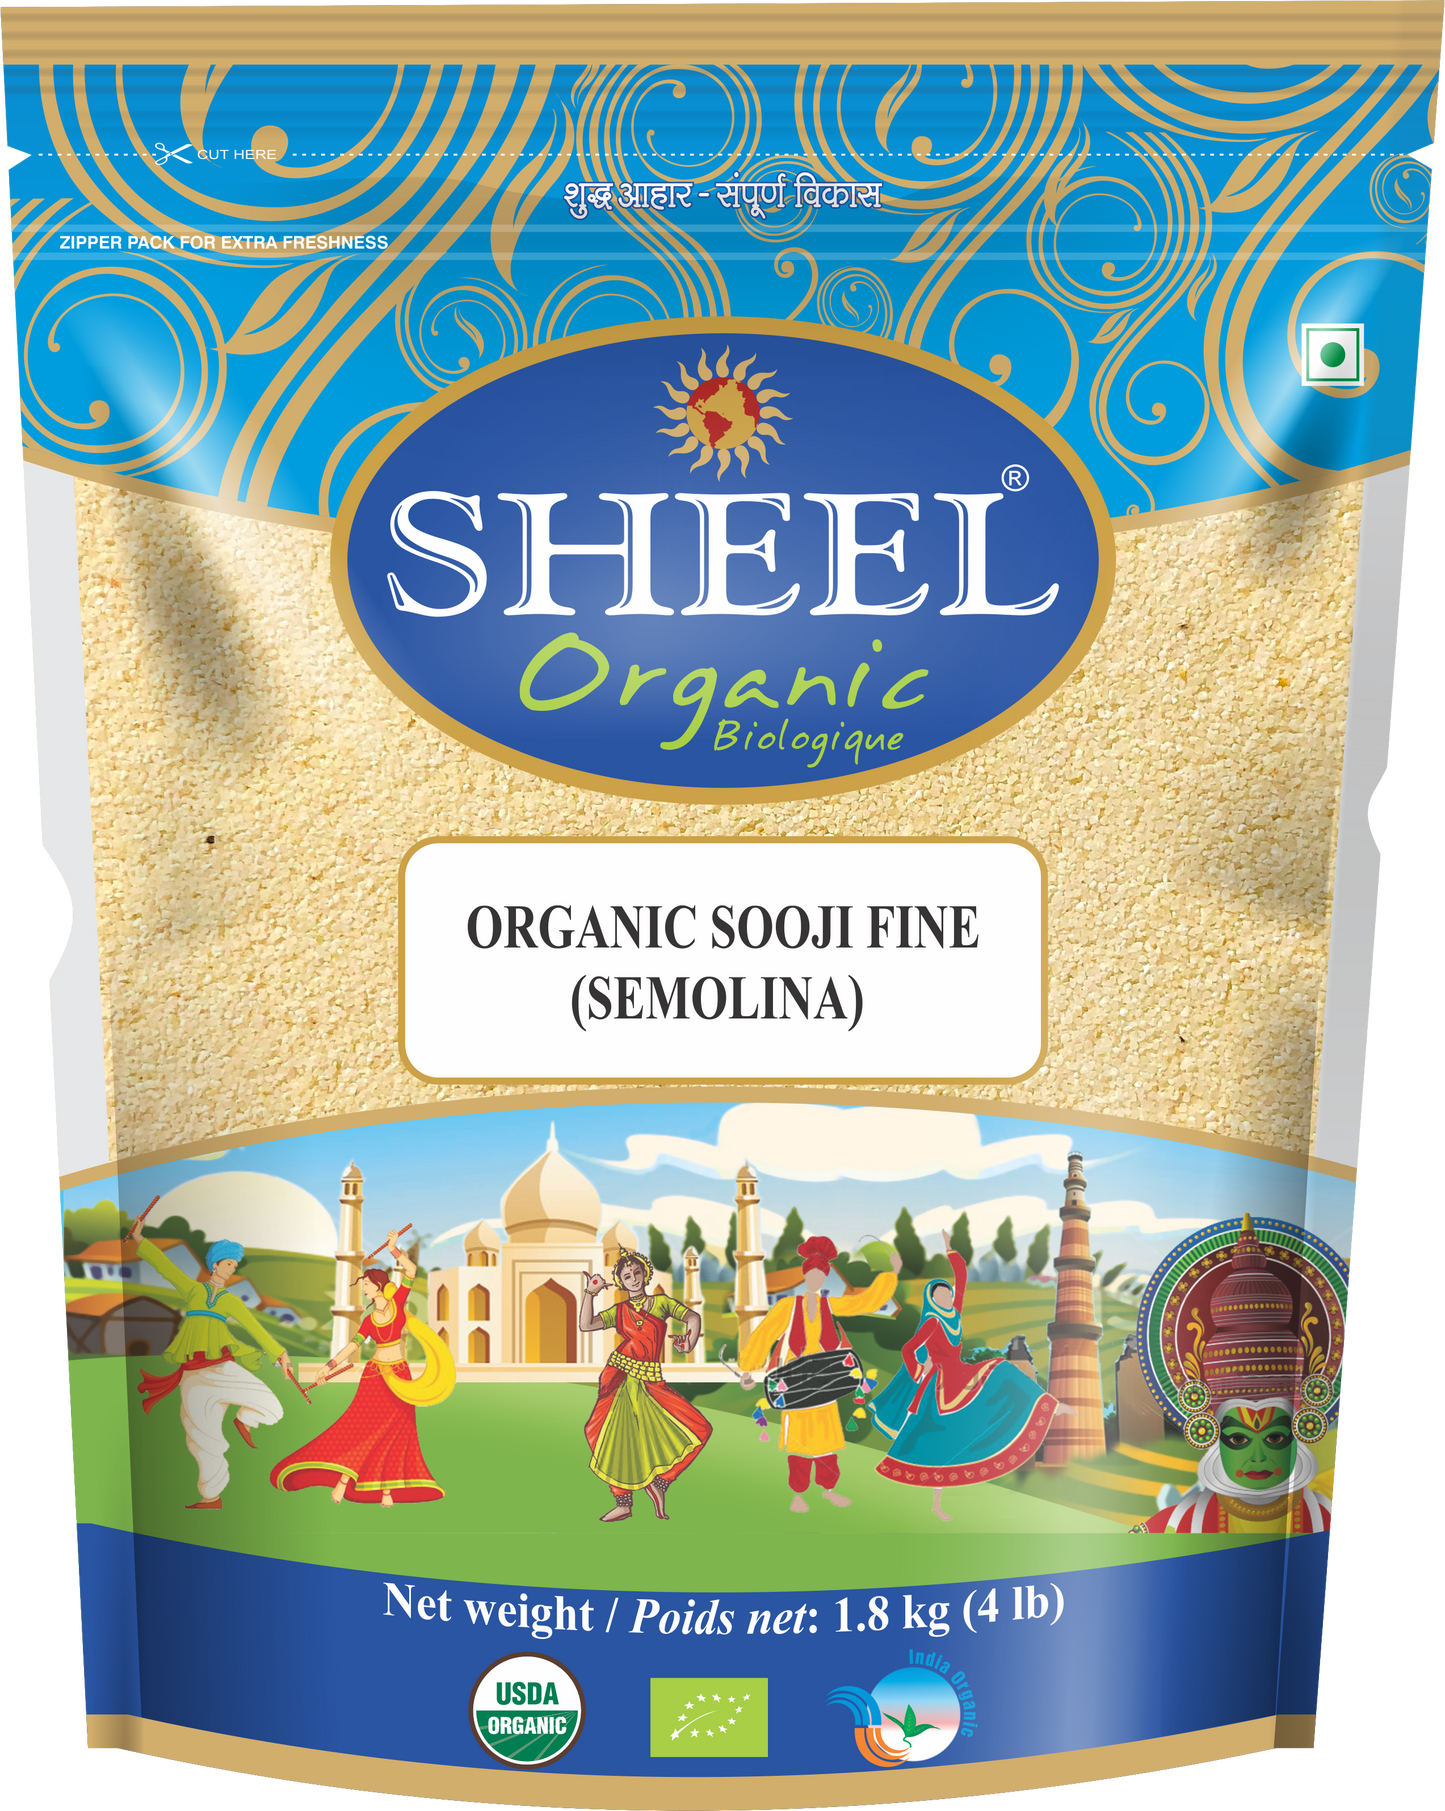 Sheel Organic Sooji Fine / Semolina - 4 Lb (1.8Kg)